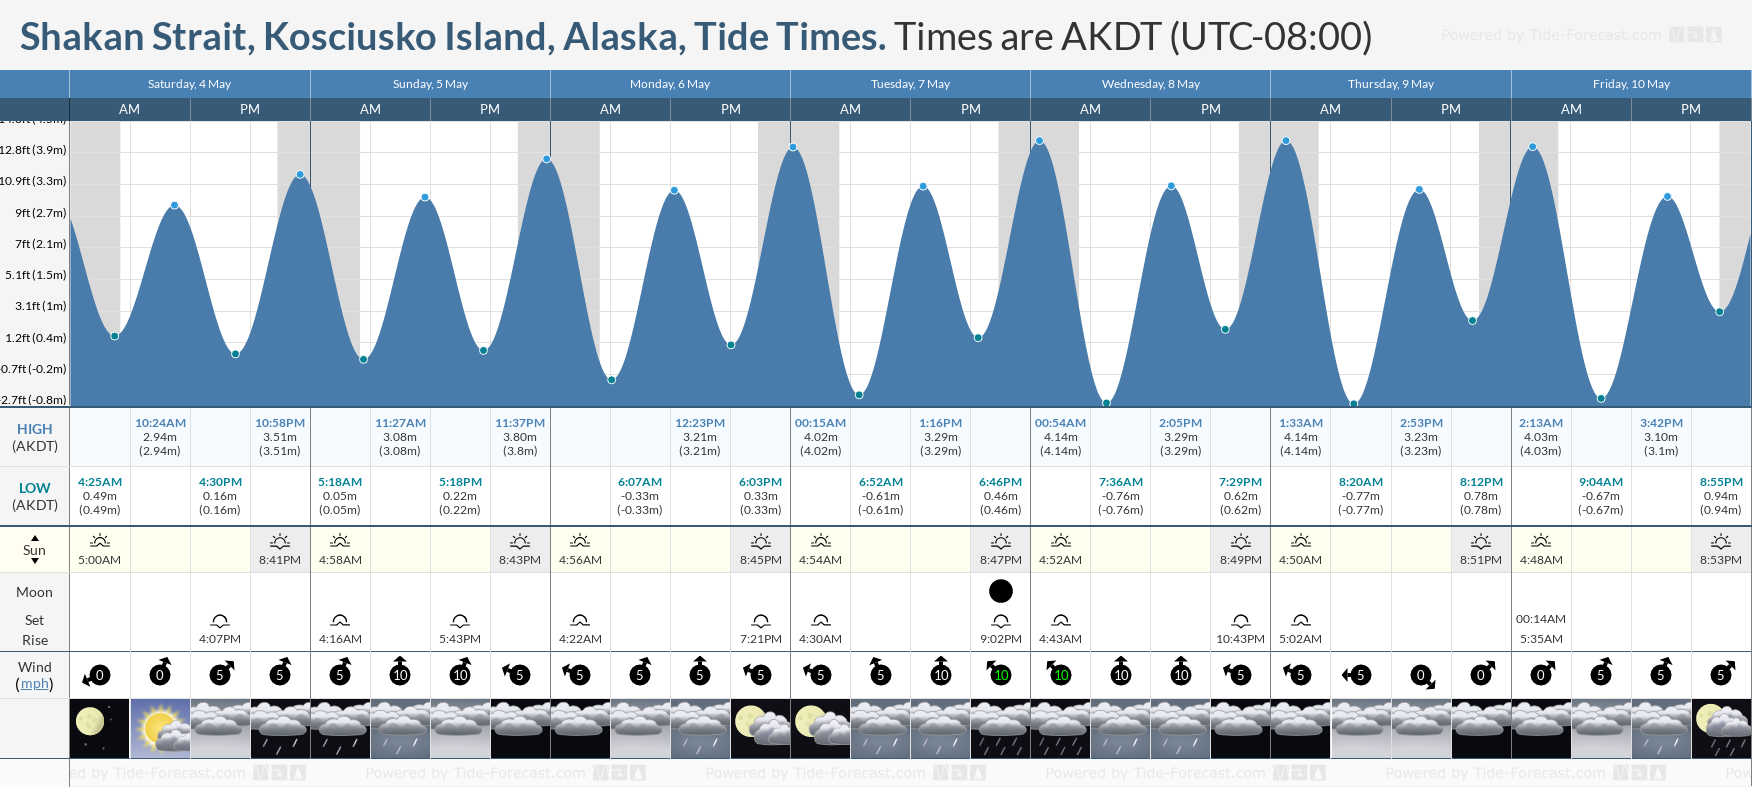 Shakan Strait, Kosciusko Island, Alaska Tide Chart including high and low tide tide times for the next 7 days